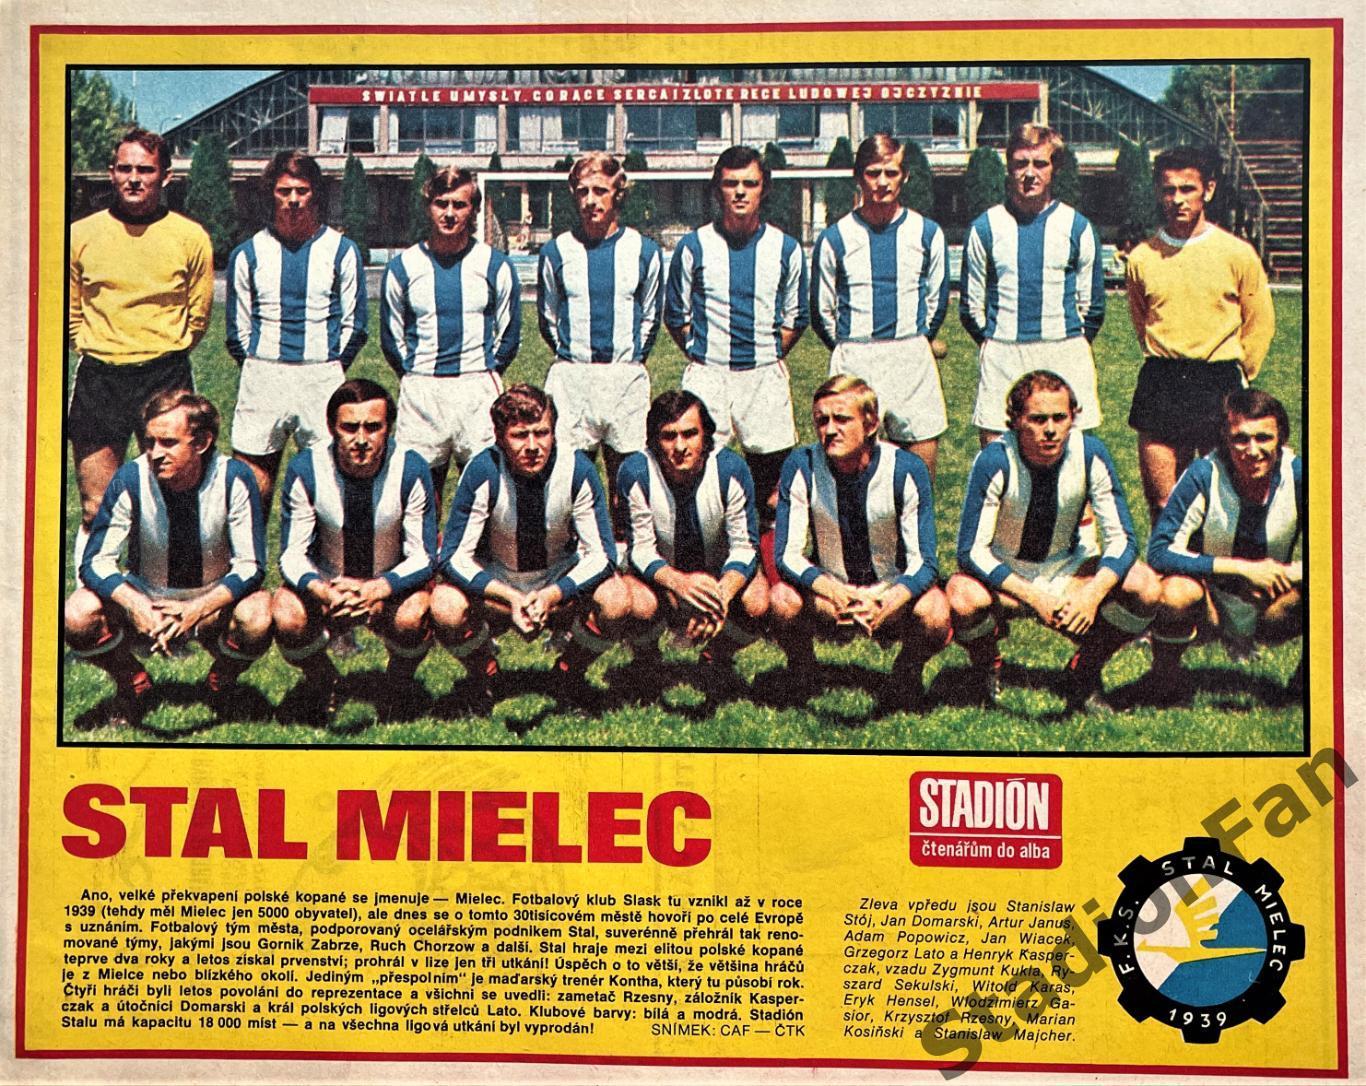 Постер из журнала Стадион (Stadion) - Stal Mielec, 1973.